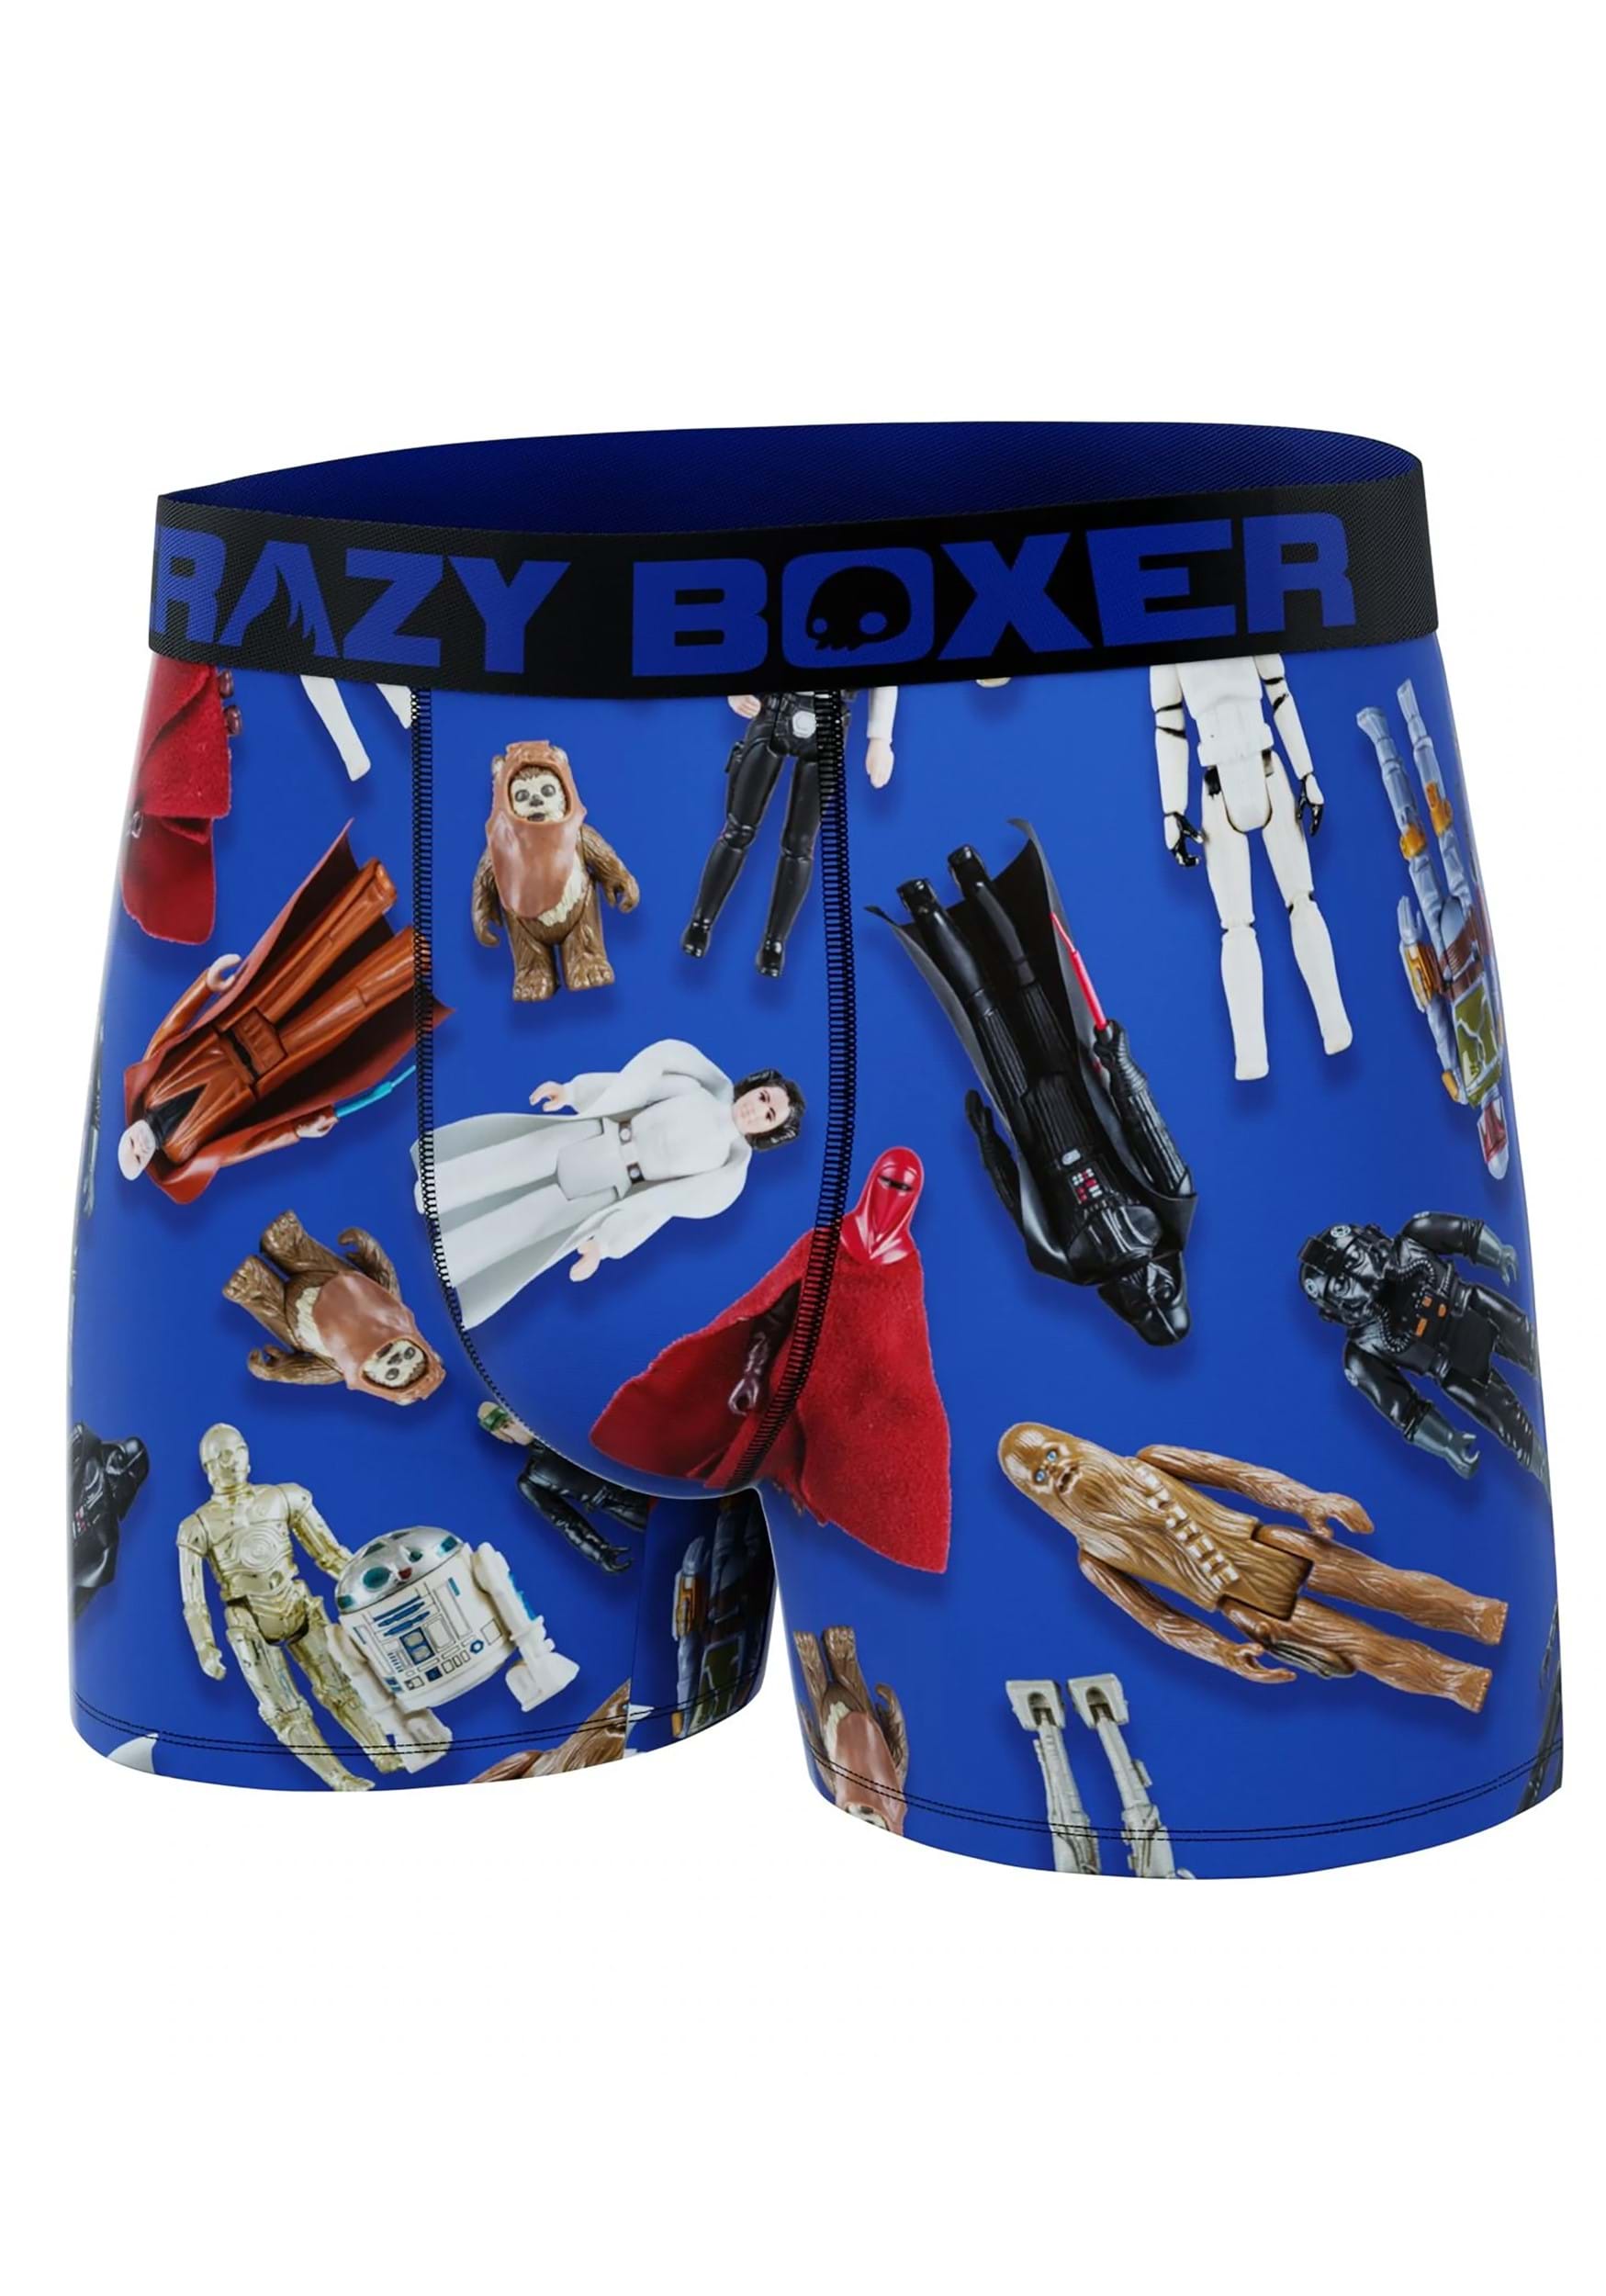 MENS Medium Xmas Star Wars Darth Vader Chewbacca Crazy Boxer Christmas  Underwear